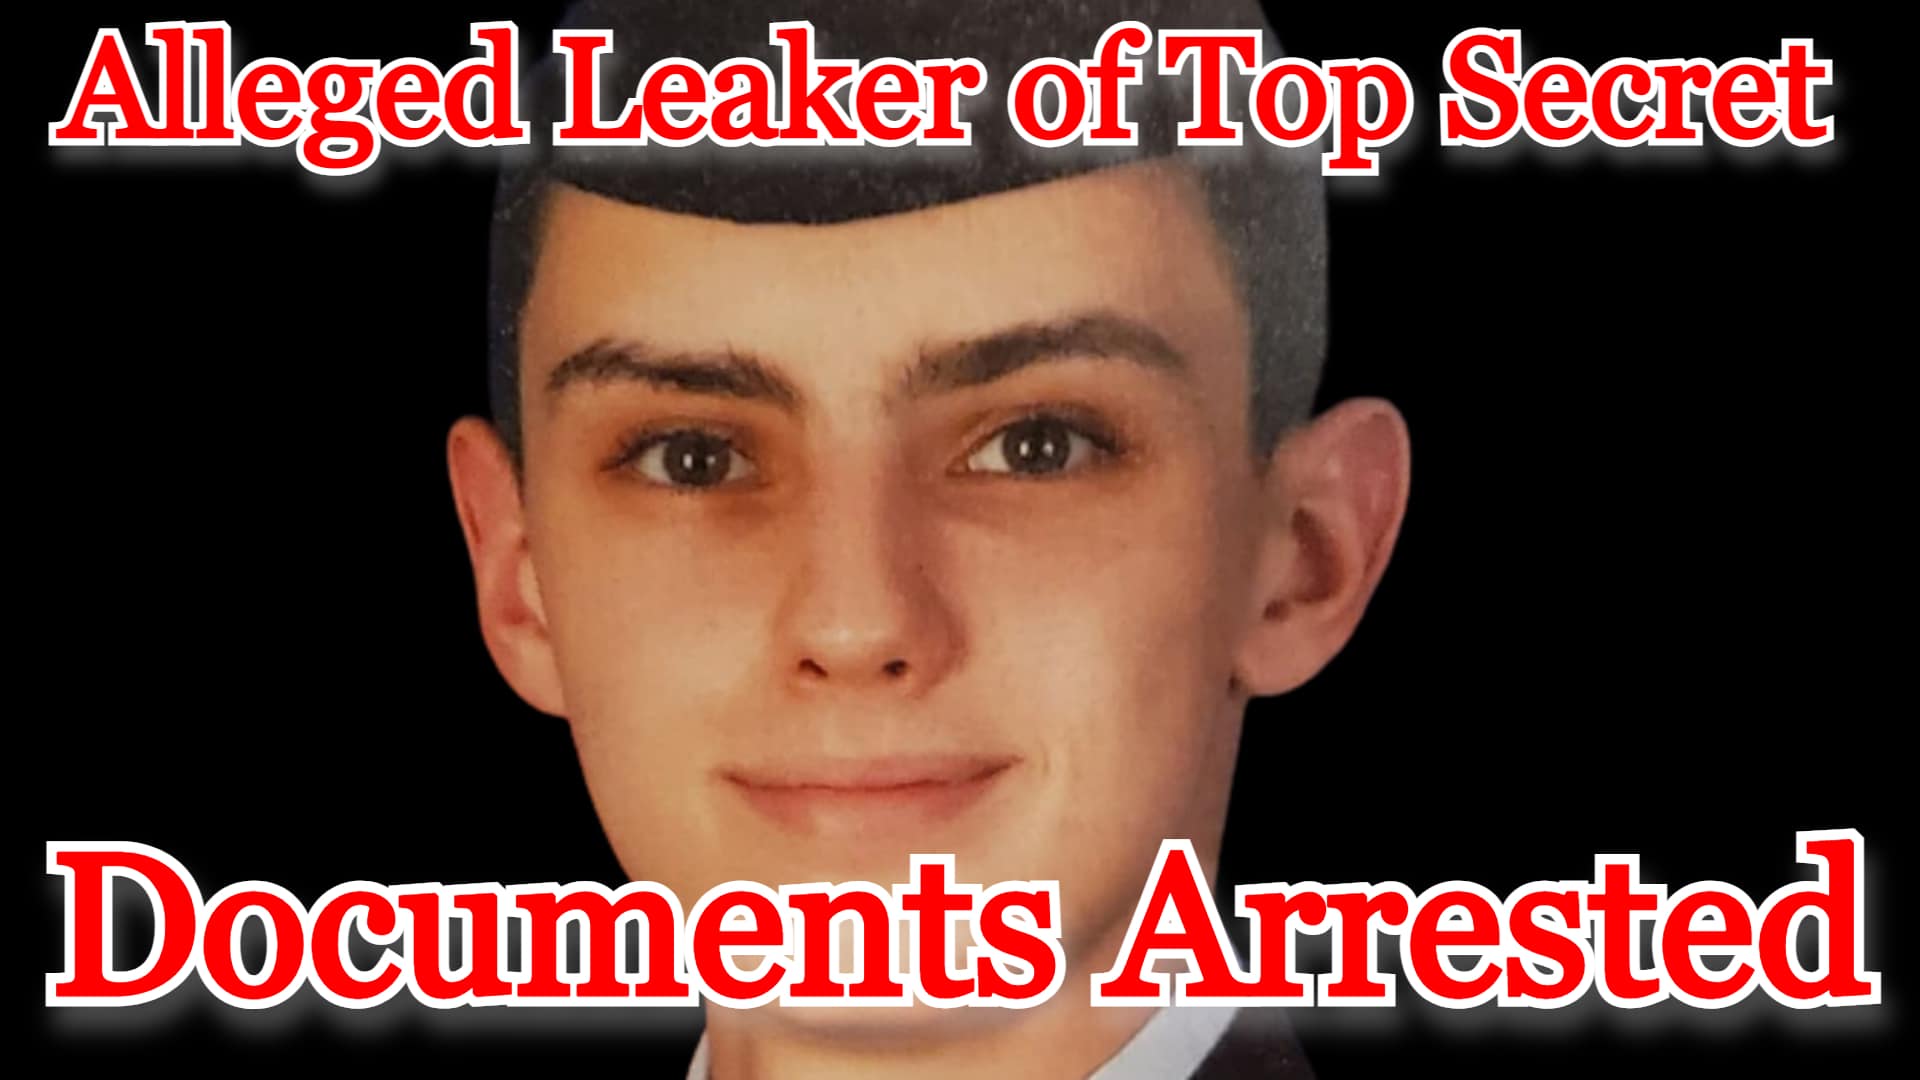 COI #408: Alleged Leaker of Top Secret Documents Arrested